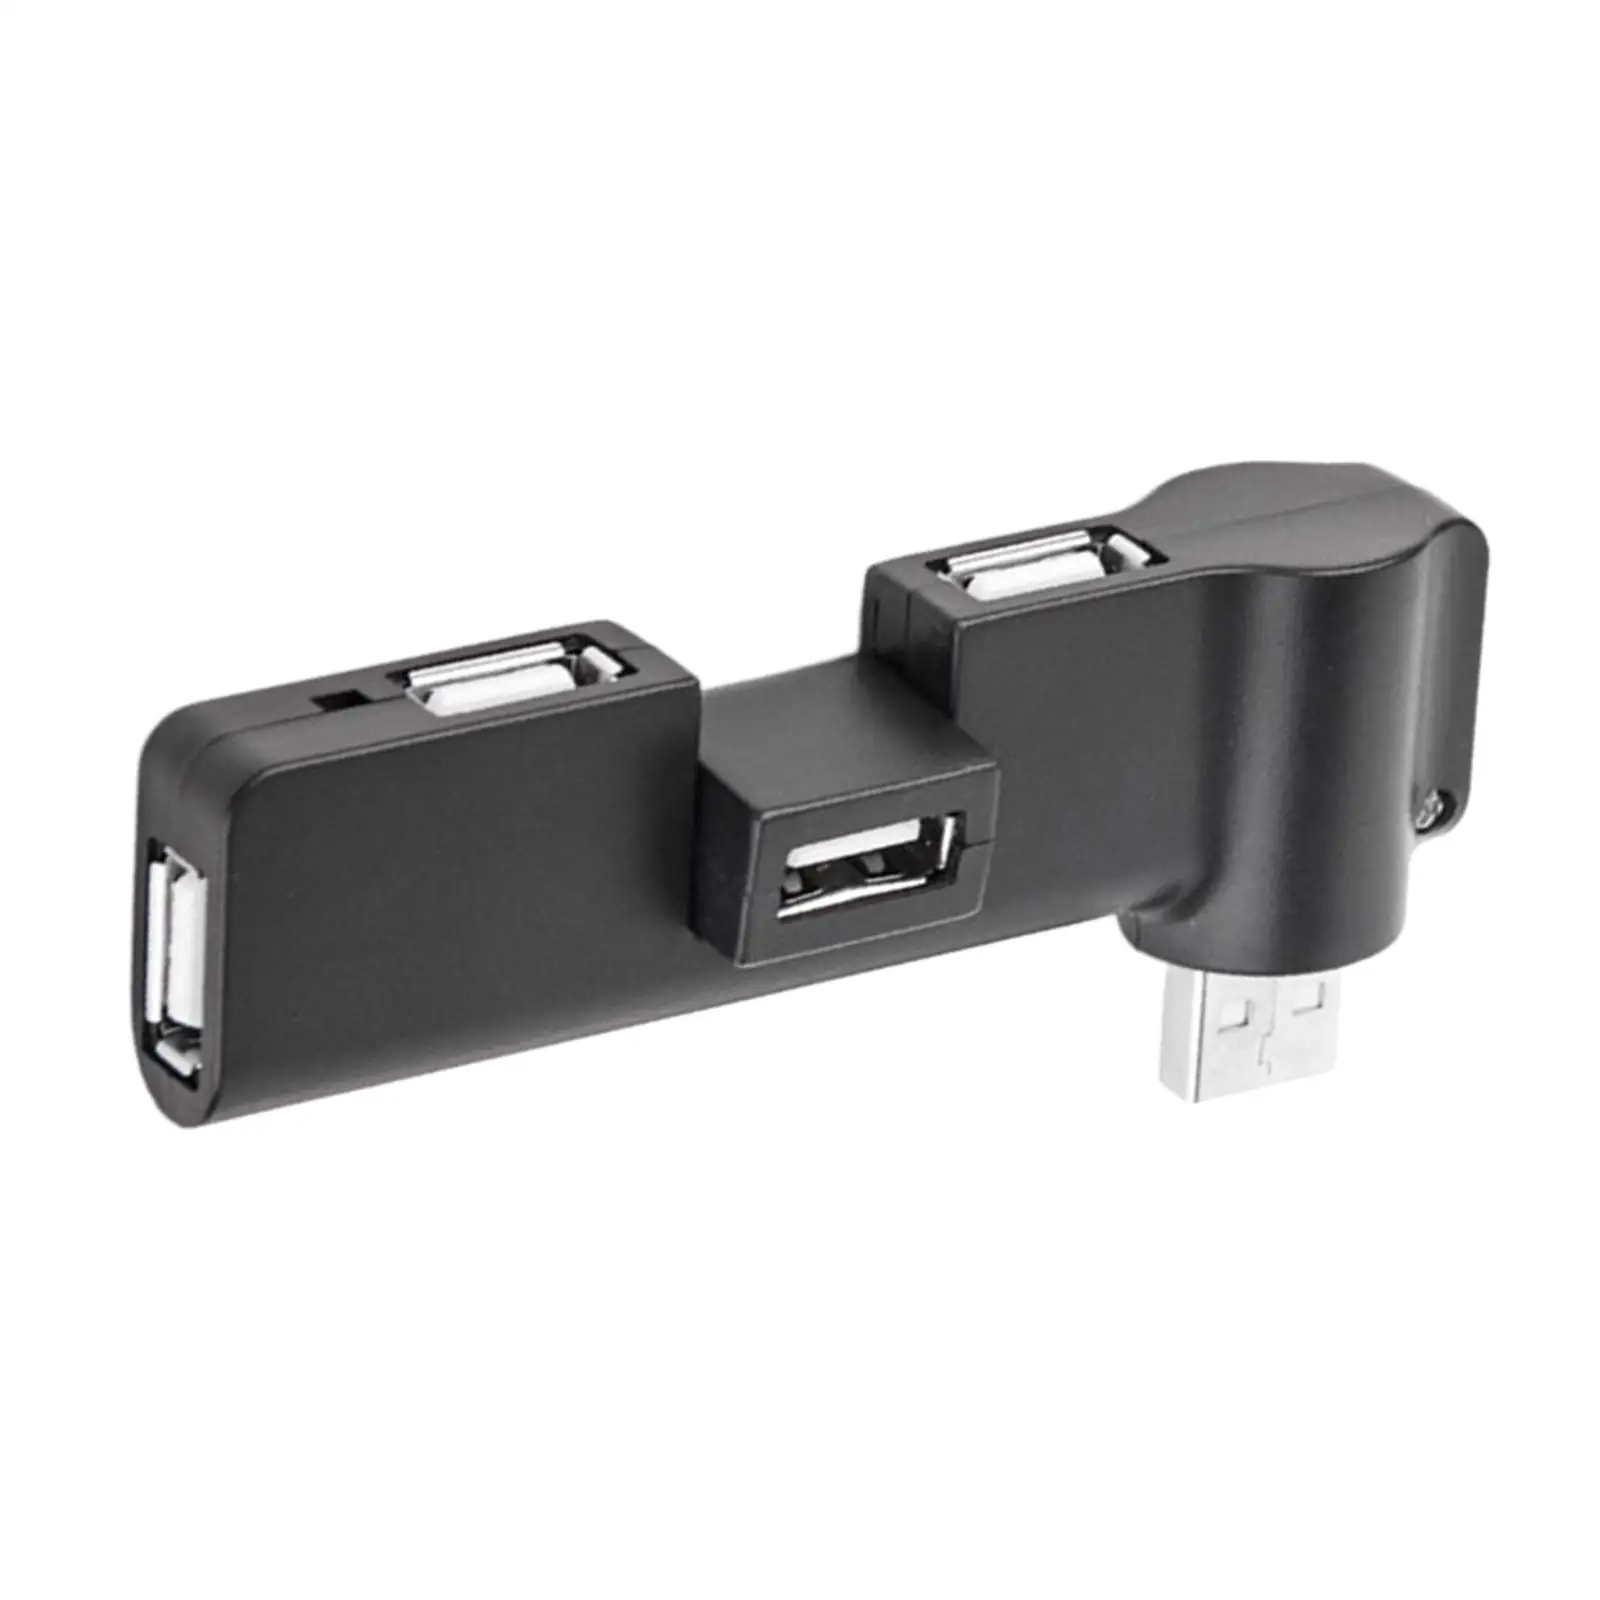 4 Port USB Hub 90/180 Degree Rotatable Plug and Play USB Expansion for USB Flash Drives Printer Game Console